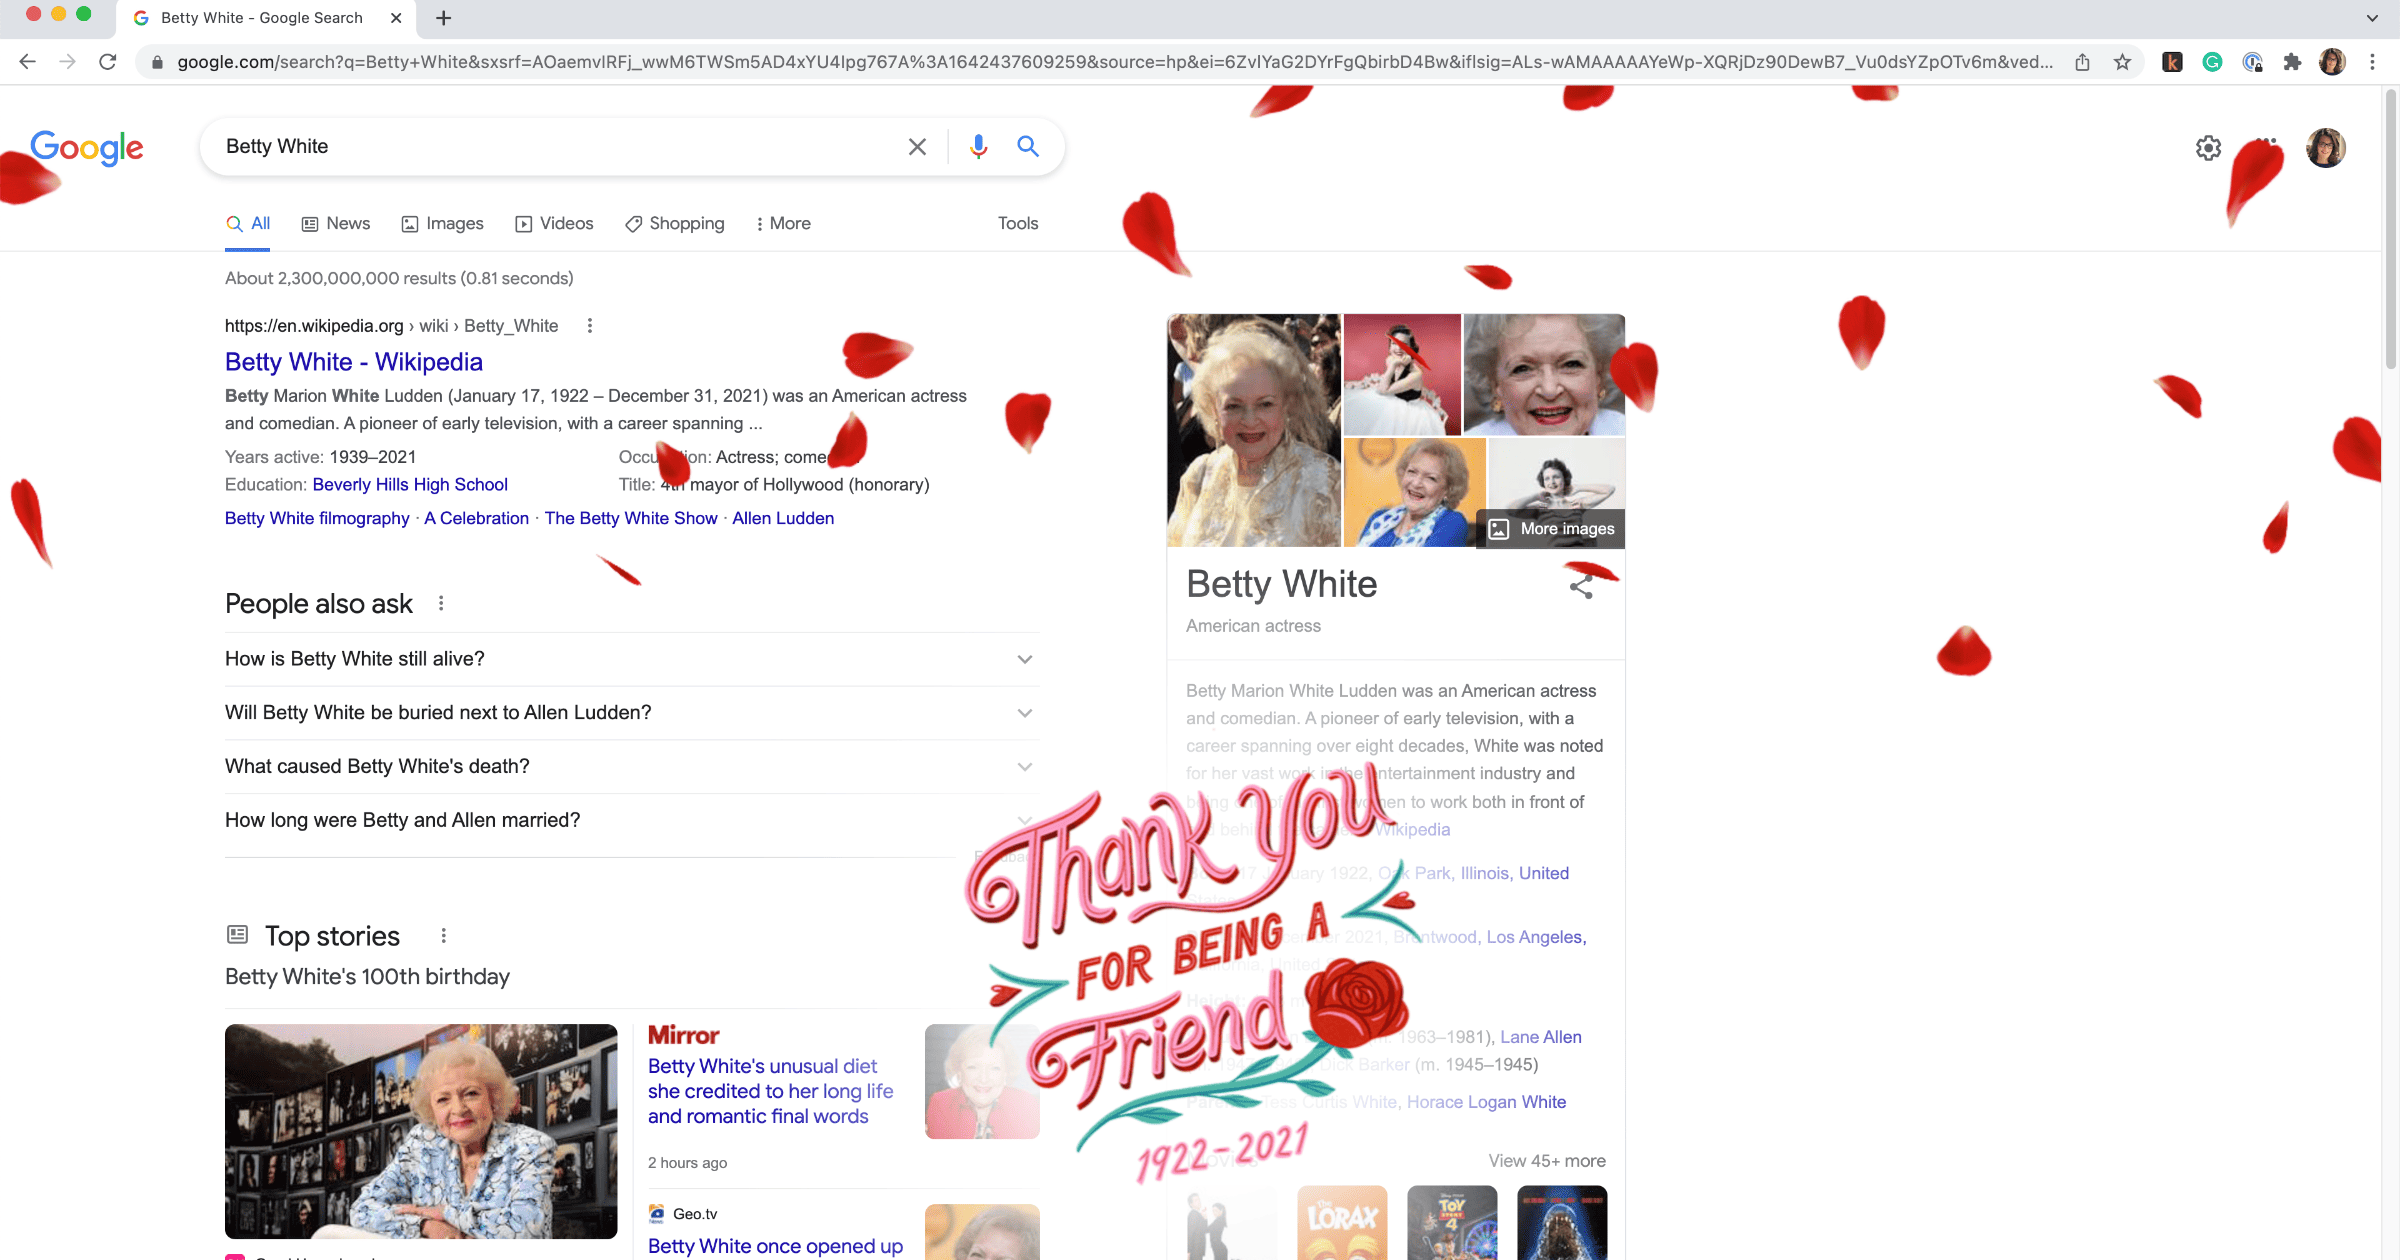 Google Easter Egg Celebrates Betty White’s 100th Birthday